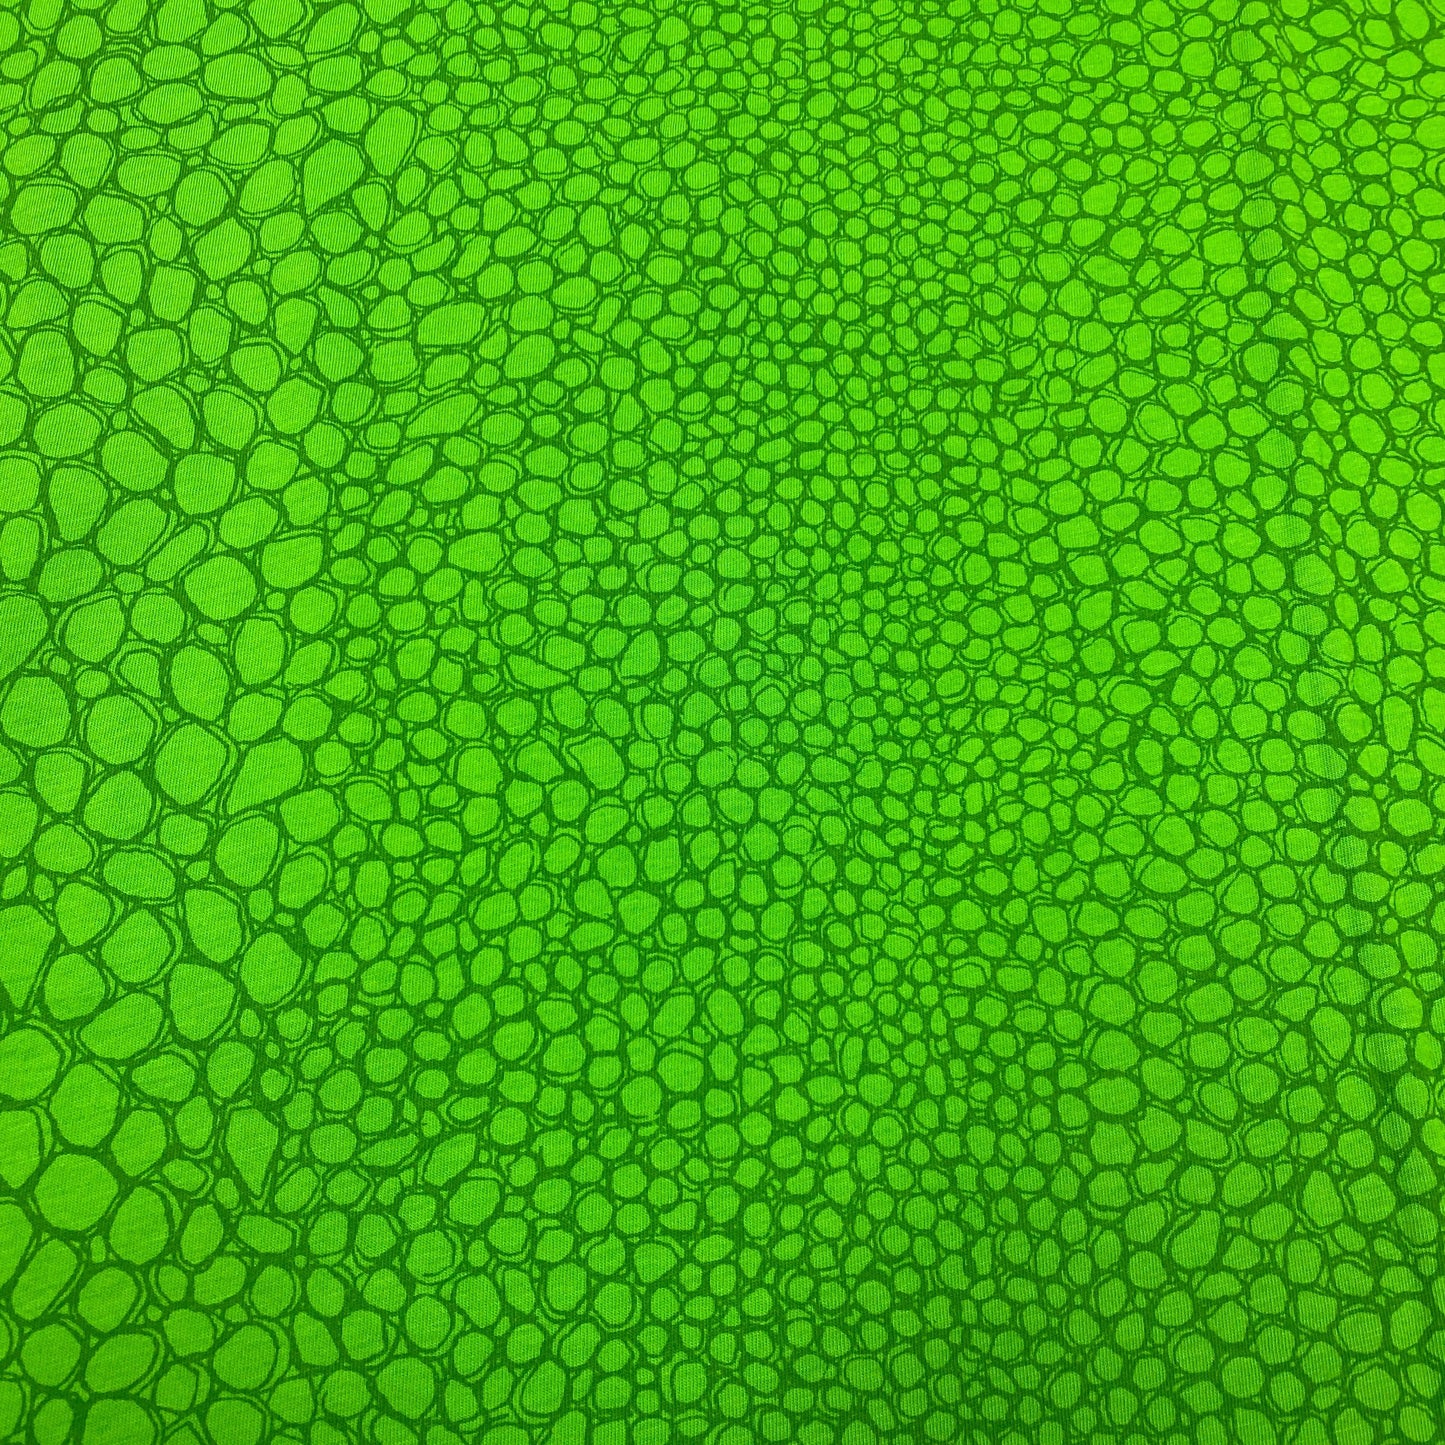 Alligator Skin on Green Organic Cotton Jersey - Nature's Fabrics